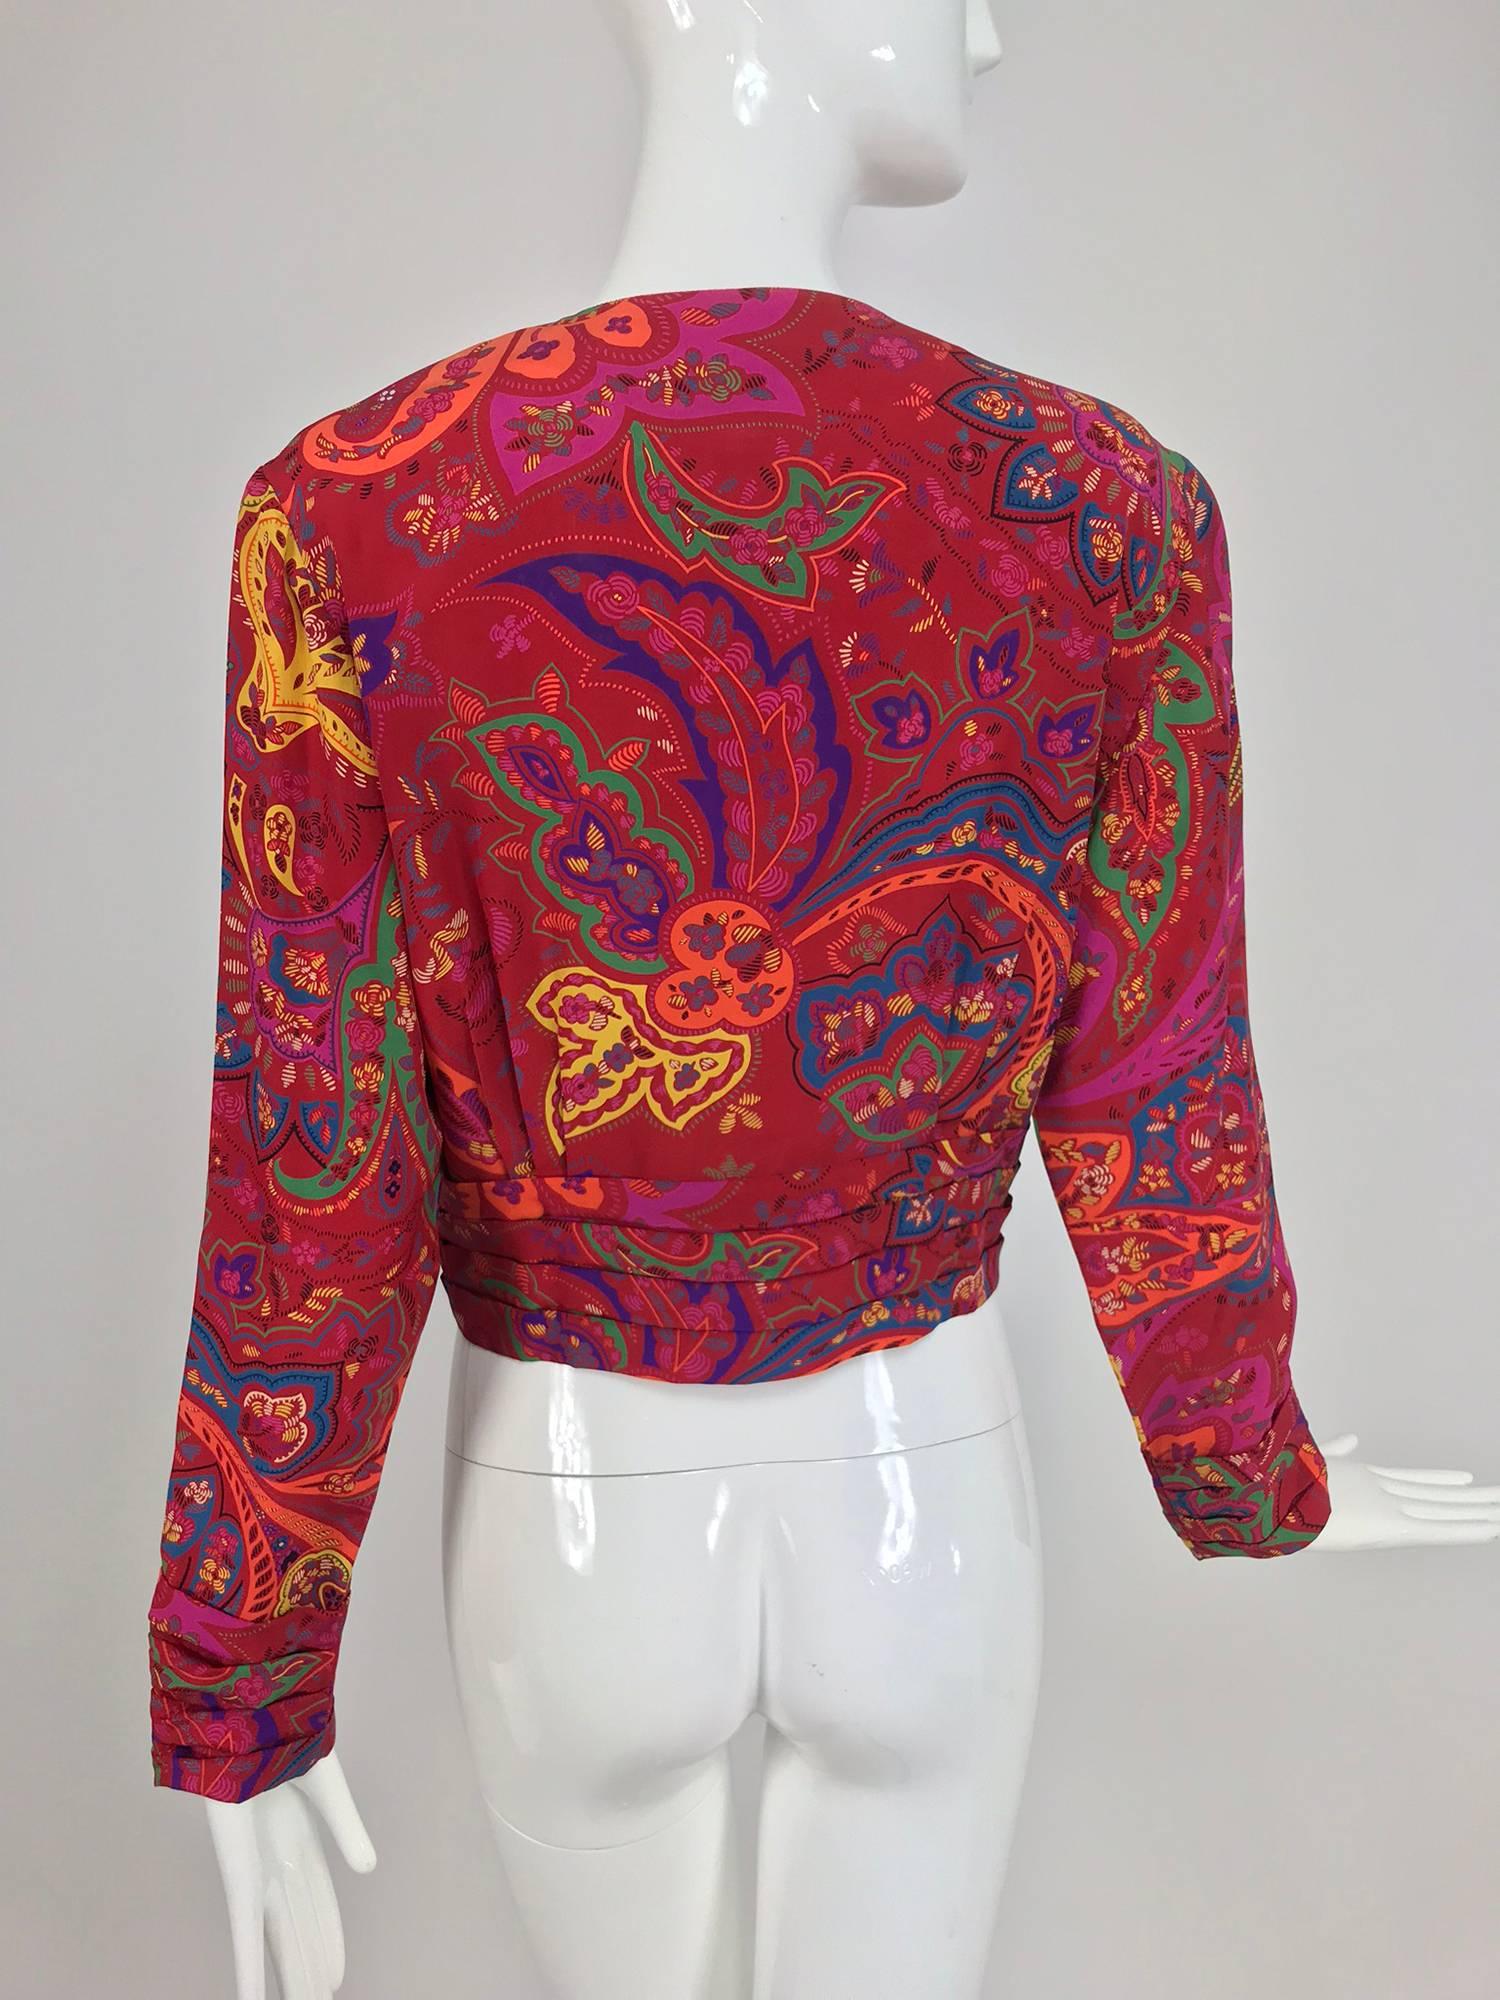 Women's or Men's Lanvin silk paisley print top 1980s